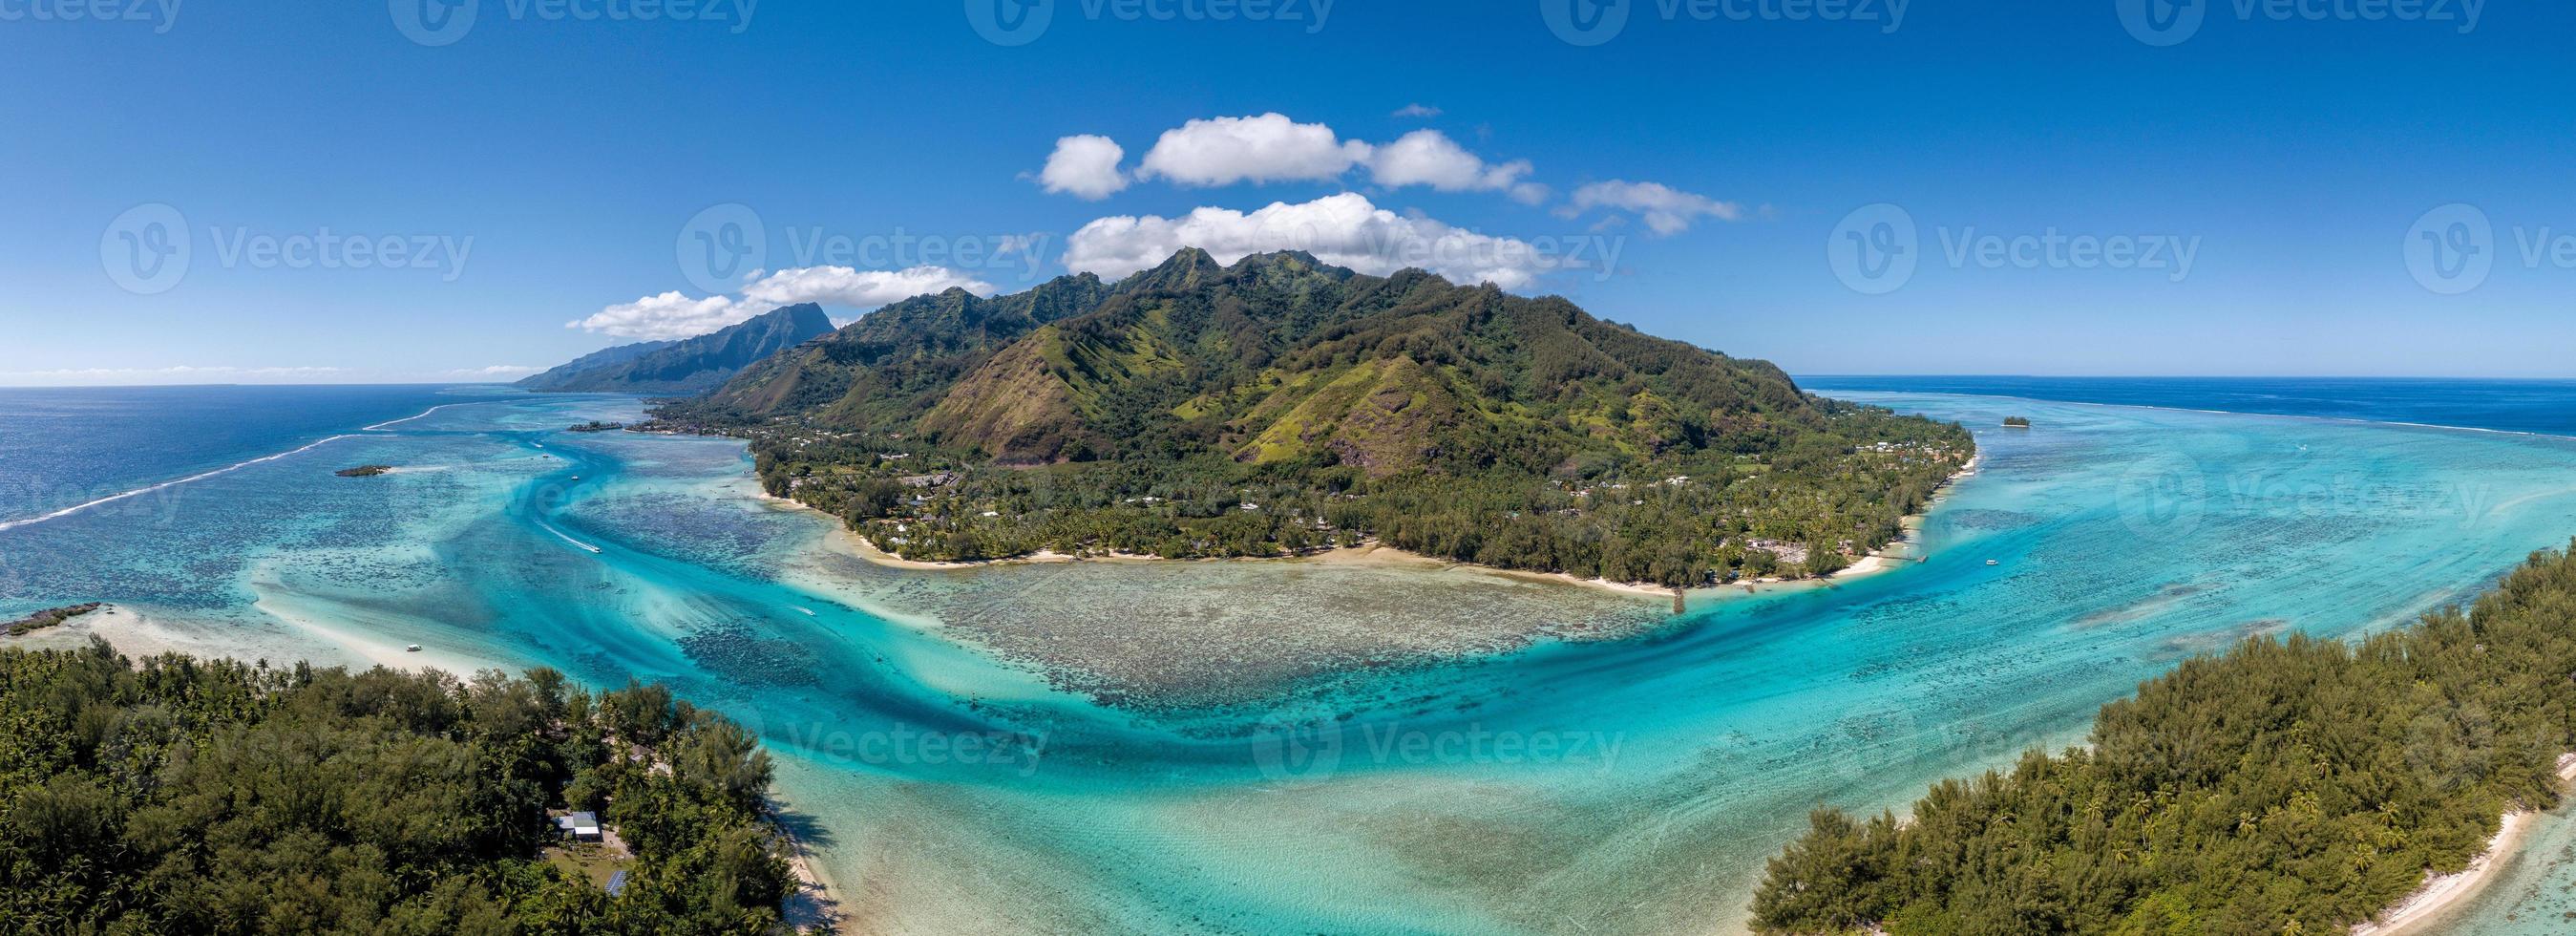 moorea ö franska polynesien lagun antenn se foto